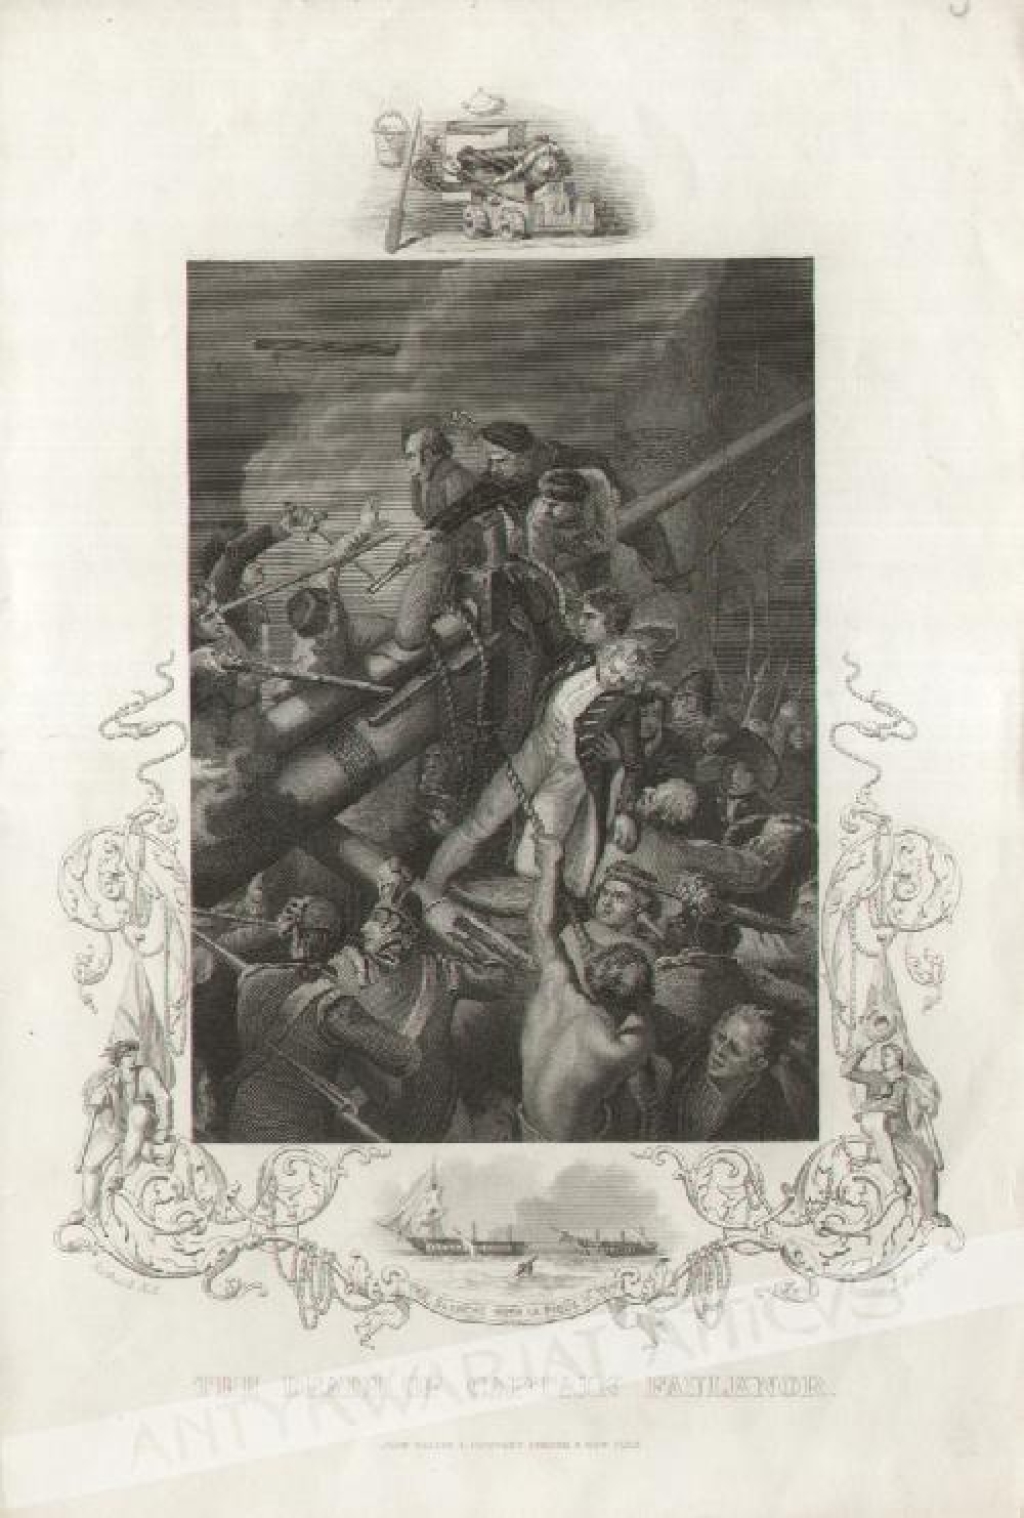 [rycina, ok.1830-50] The death of Captain Faulknor